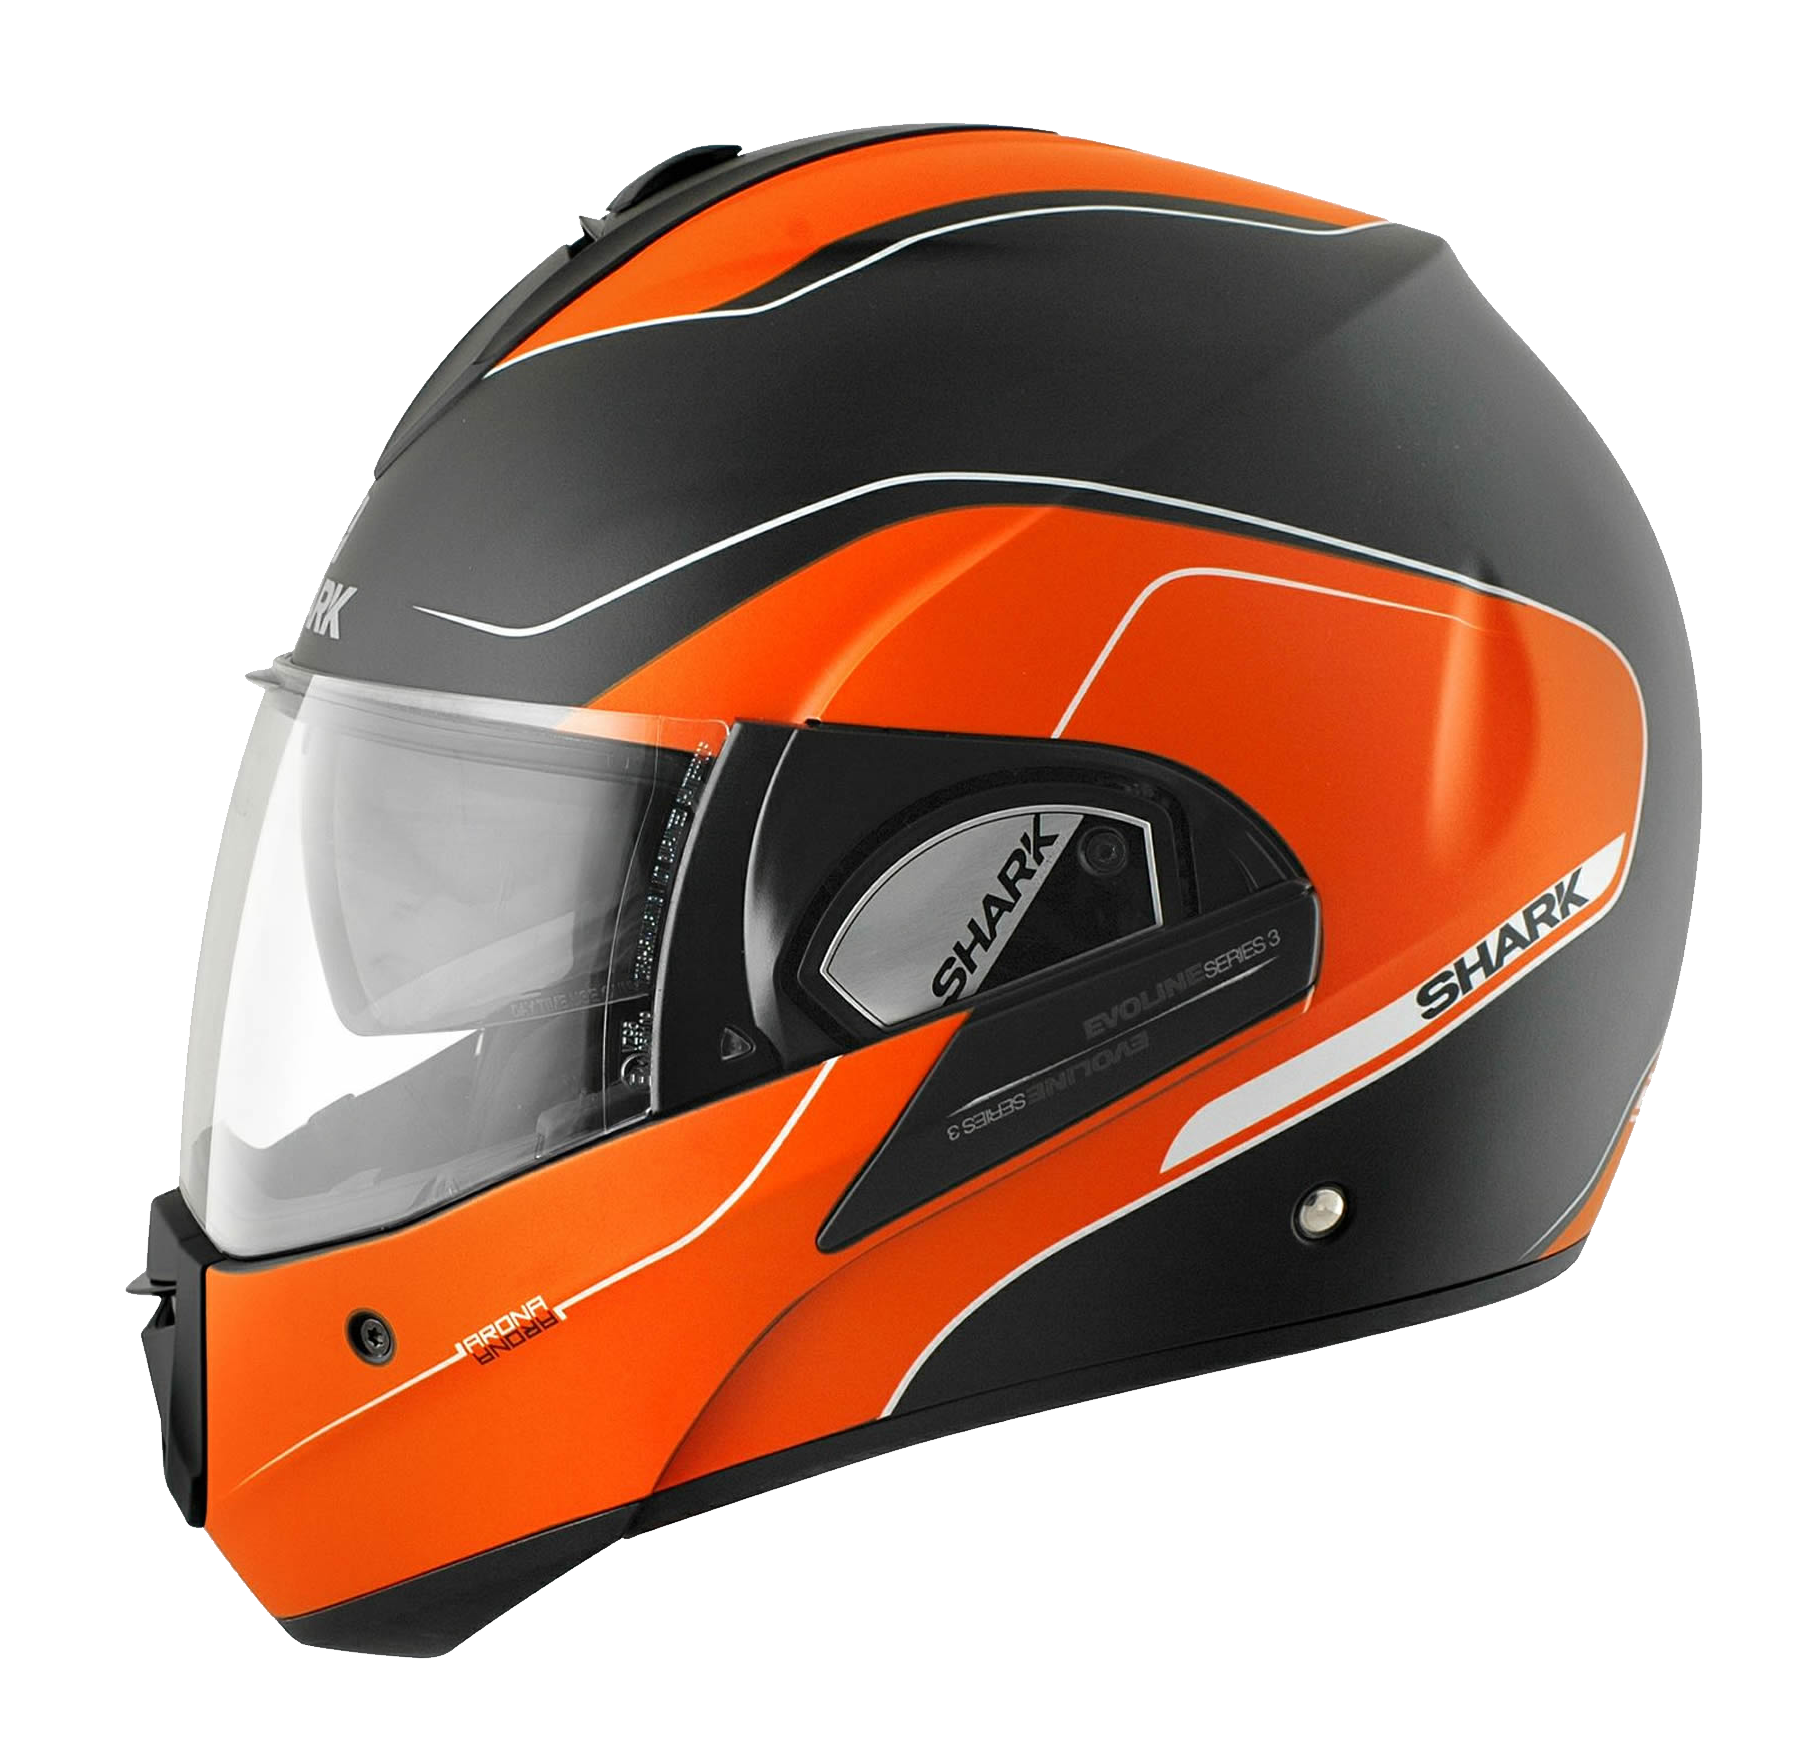 Orange and Black Motorcycle Helmet PNG HQ pngteam.com